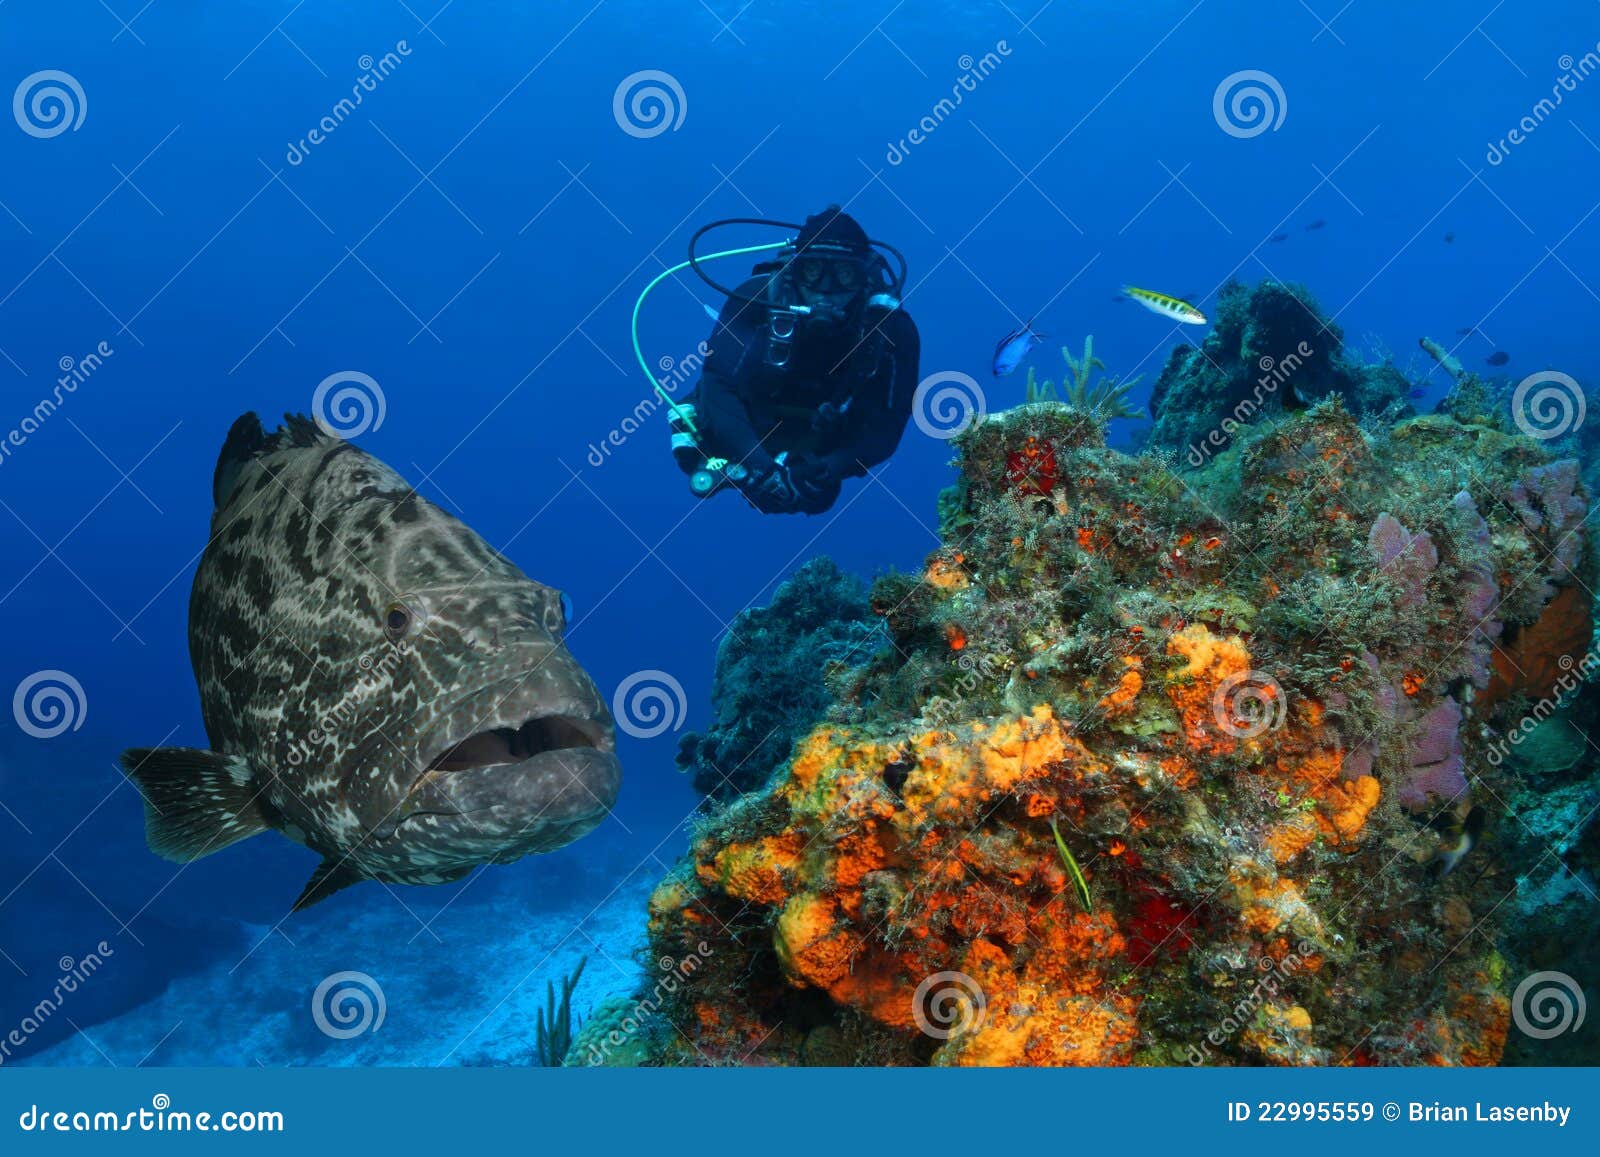 huge grouper and scuba diver